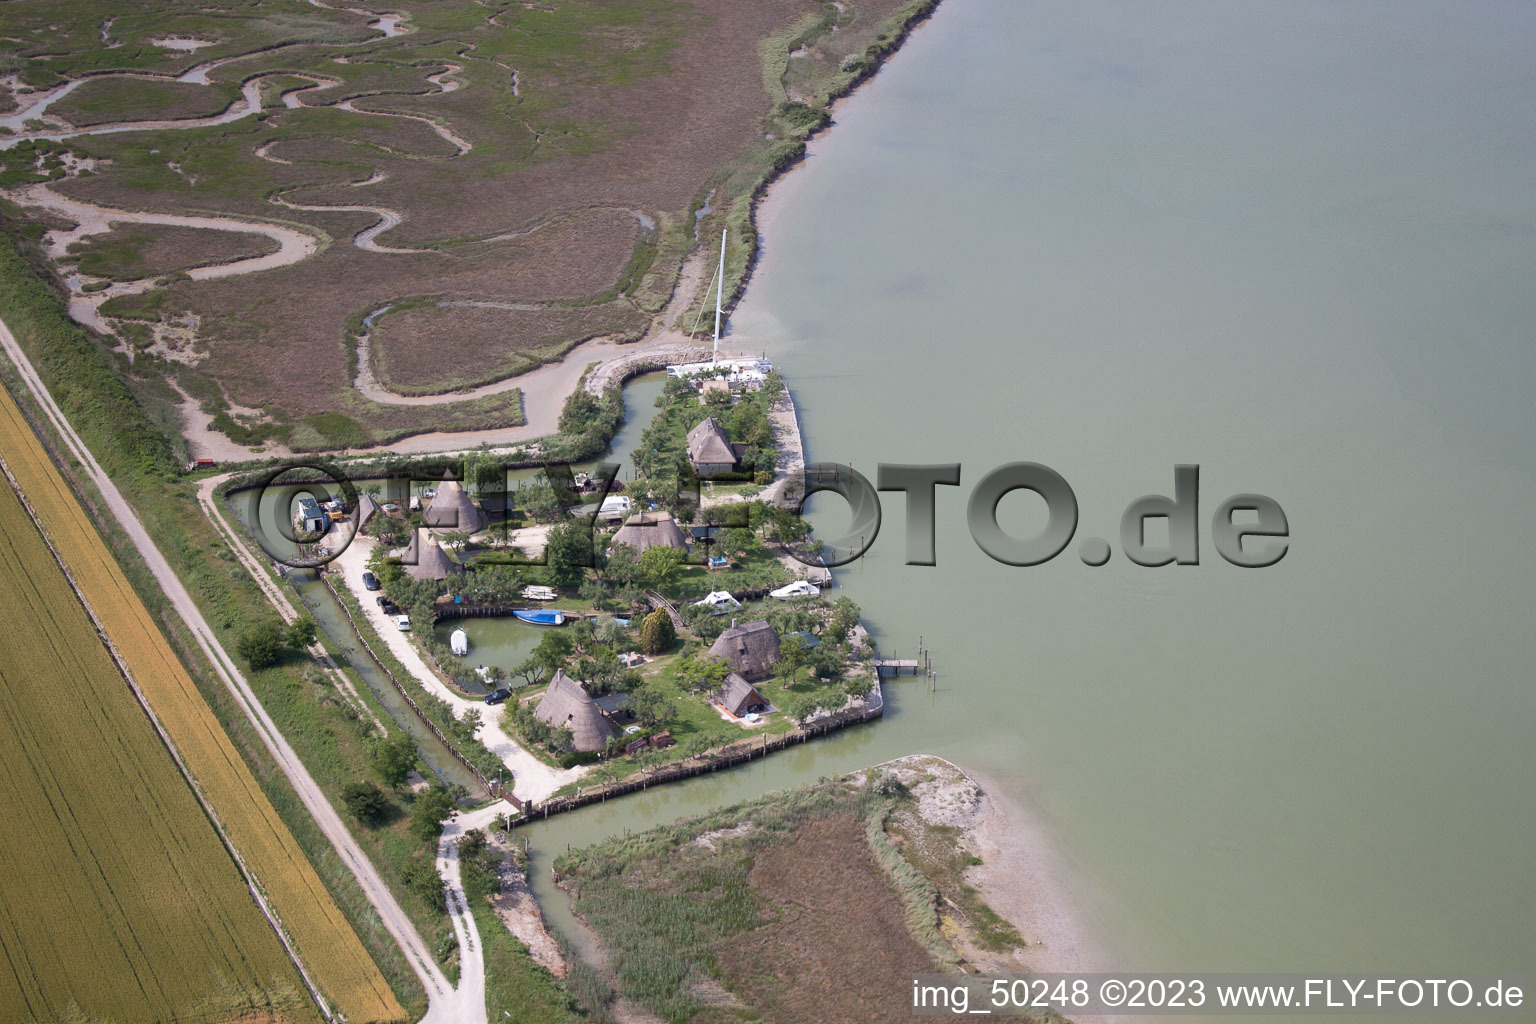 Aerial photograpy of Agenzia Valpelina in the state Veneto, Italy